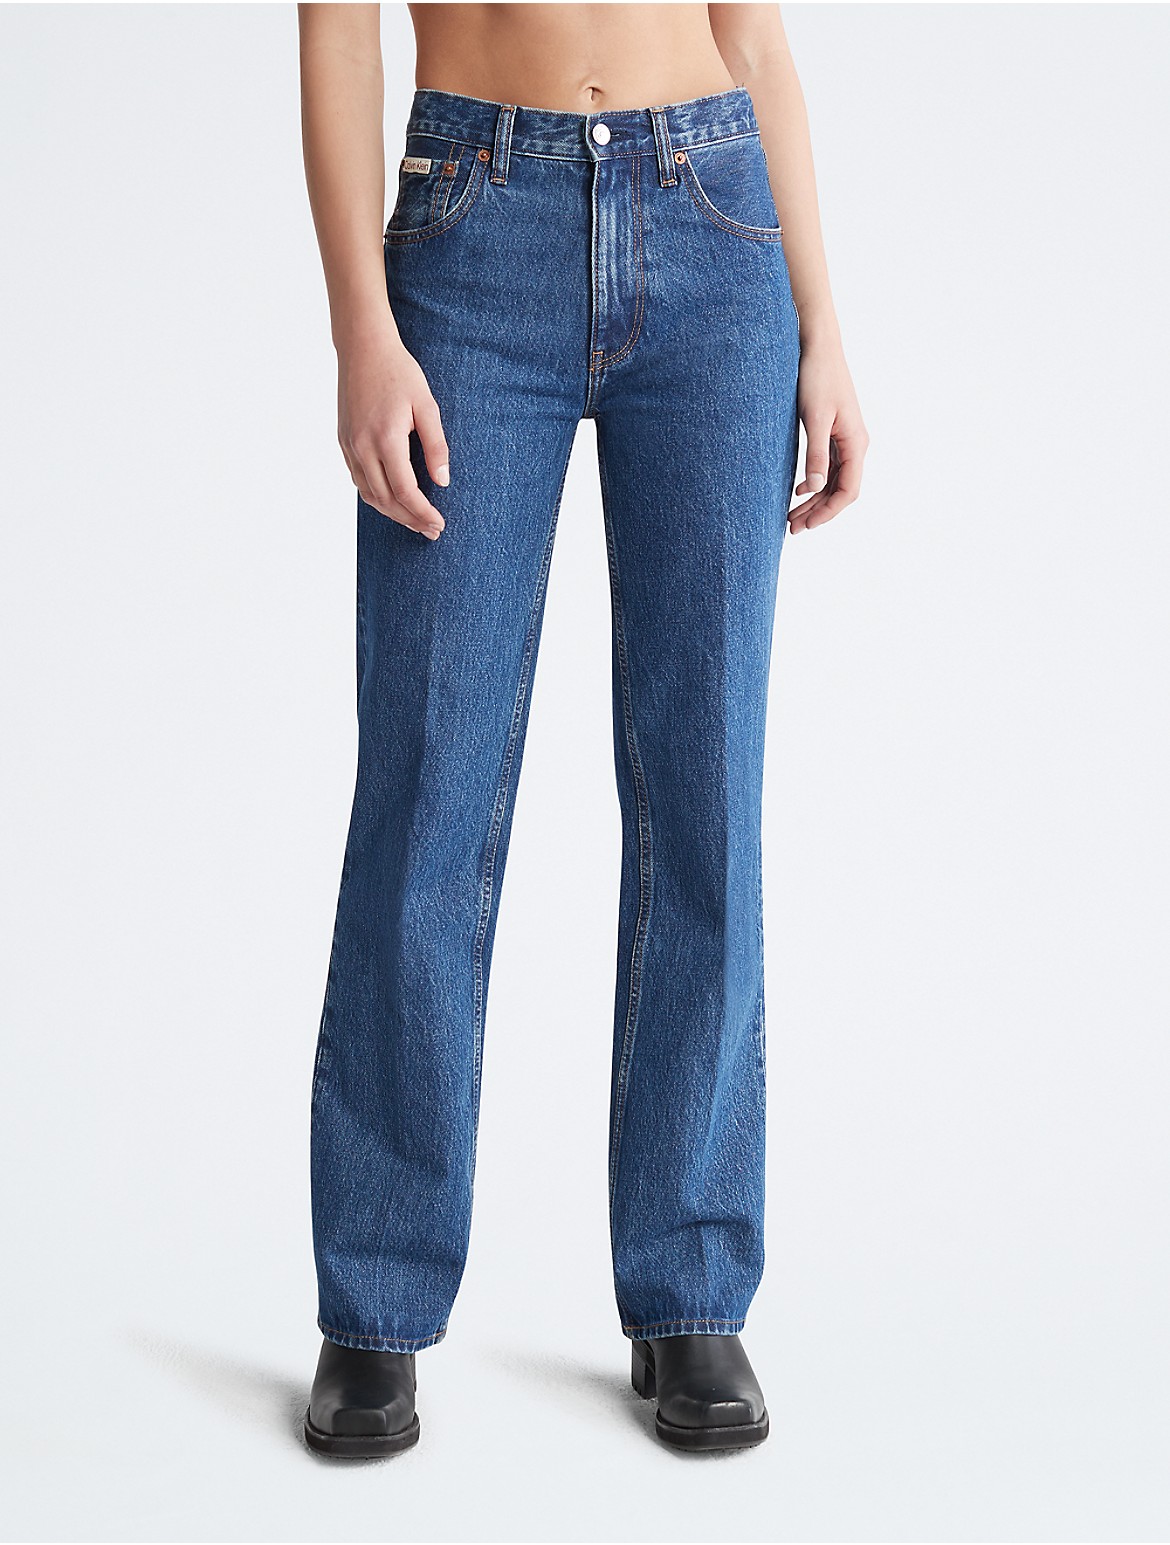 Calvin Klein Women's Original Bootcut Fit Jeans - Blue - 27